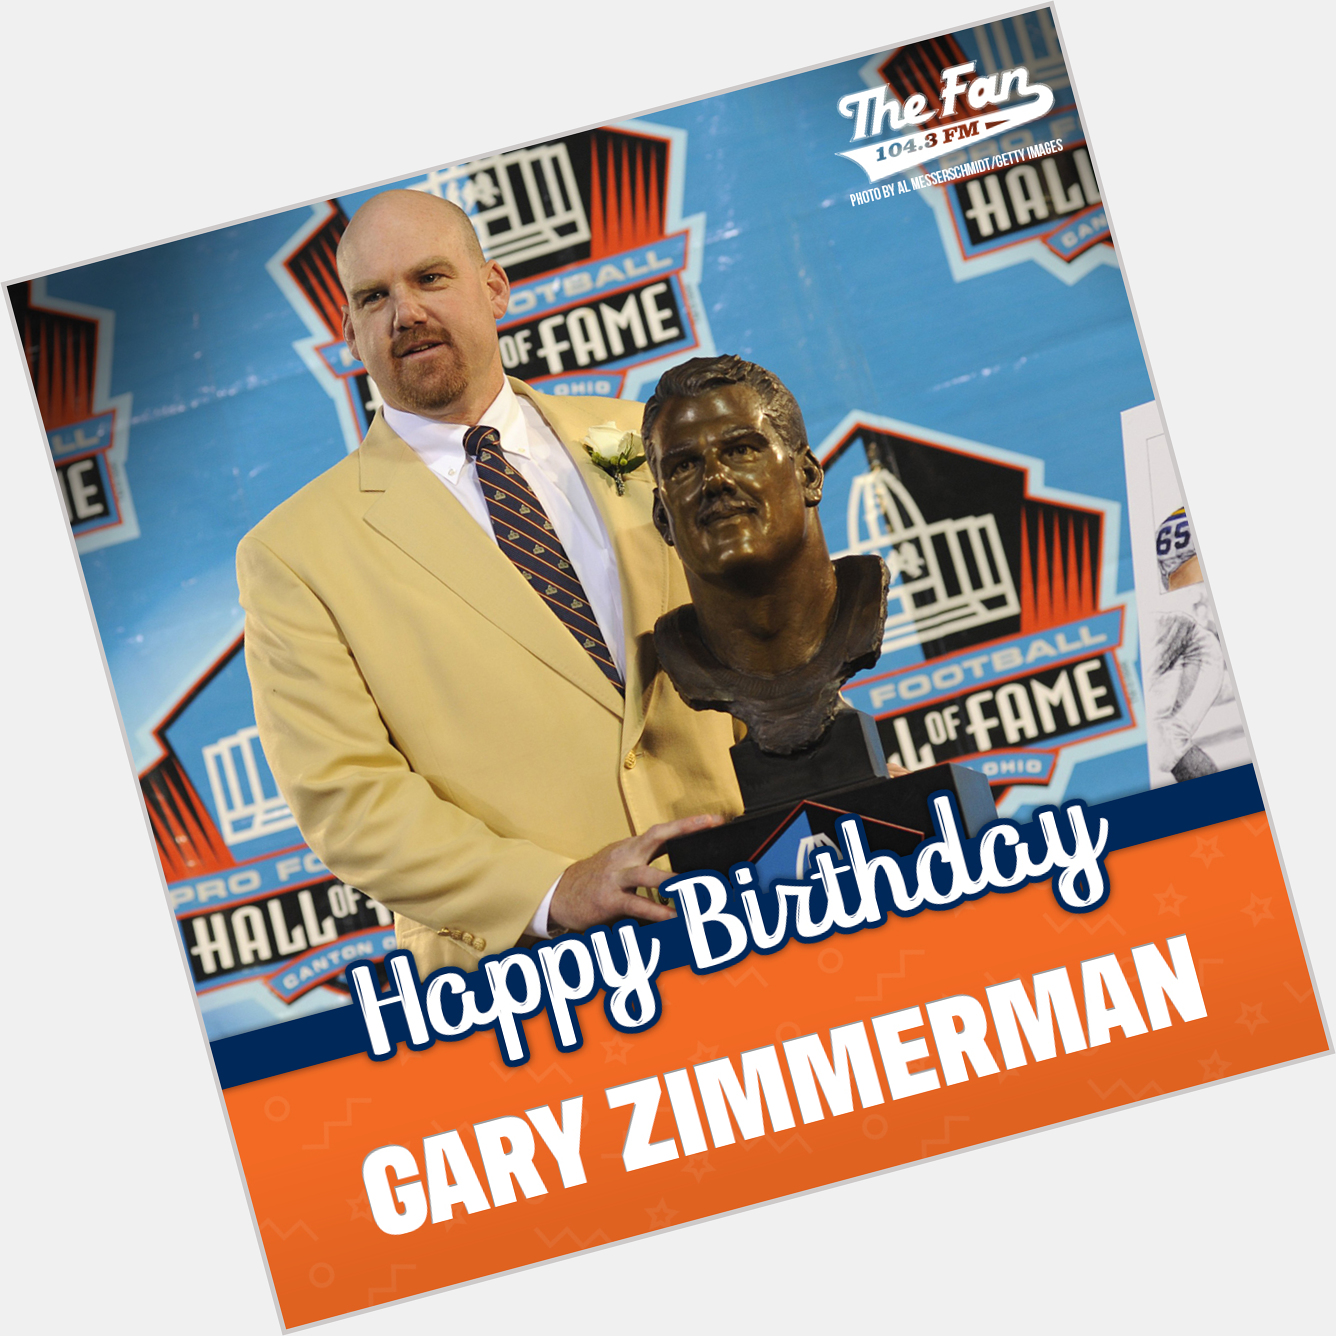 Wishing a very happy birthday to lineman and Ring of Famer Gary Zimmerman | 